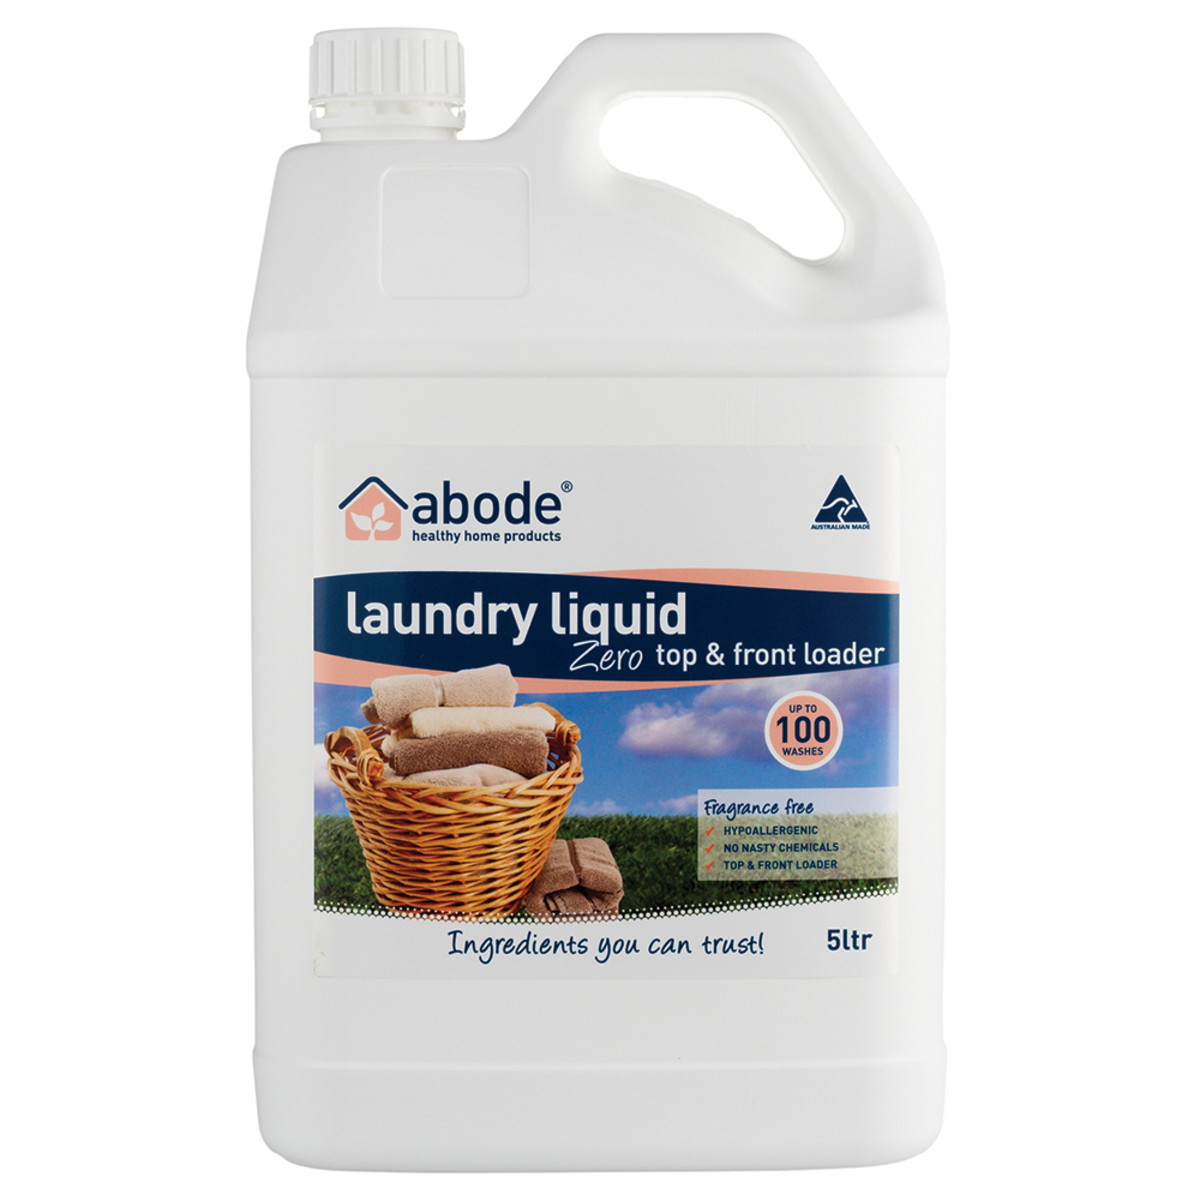 ABODE - Laundry Liquid (Front & Top Loader) Zero